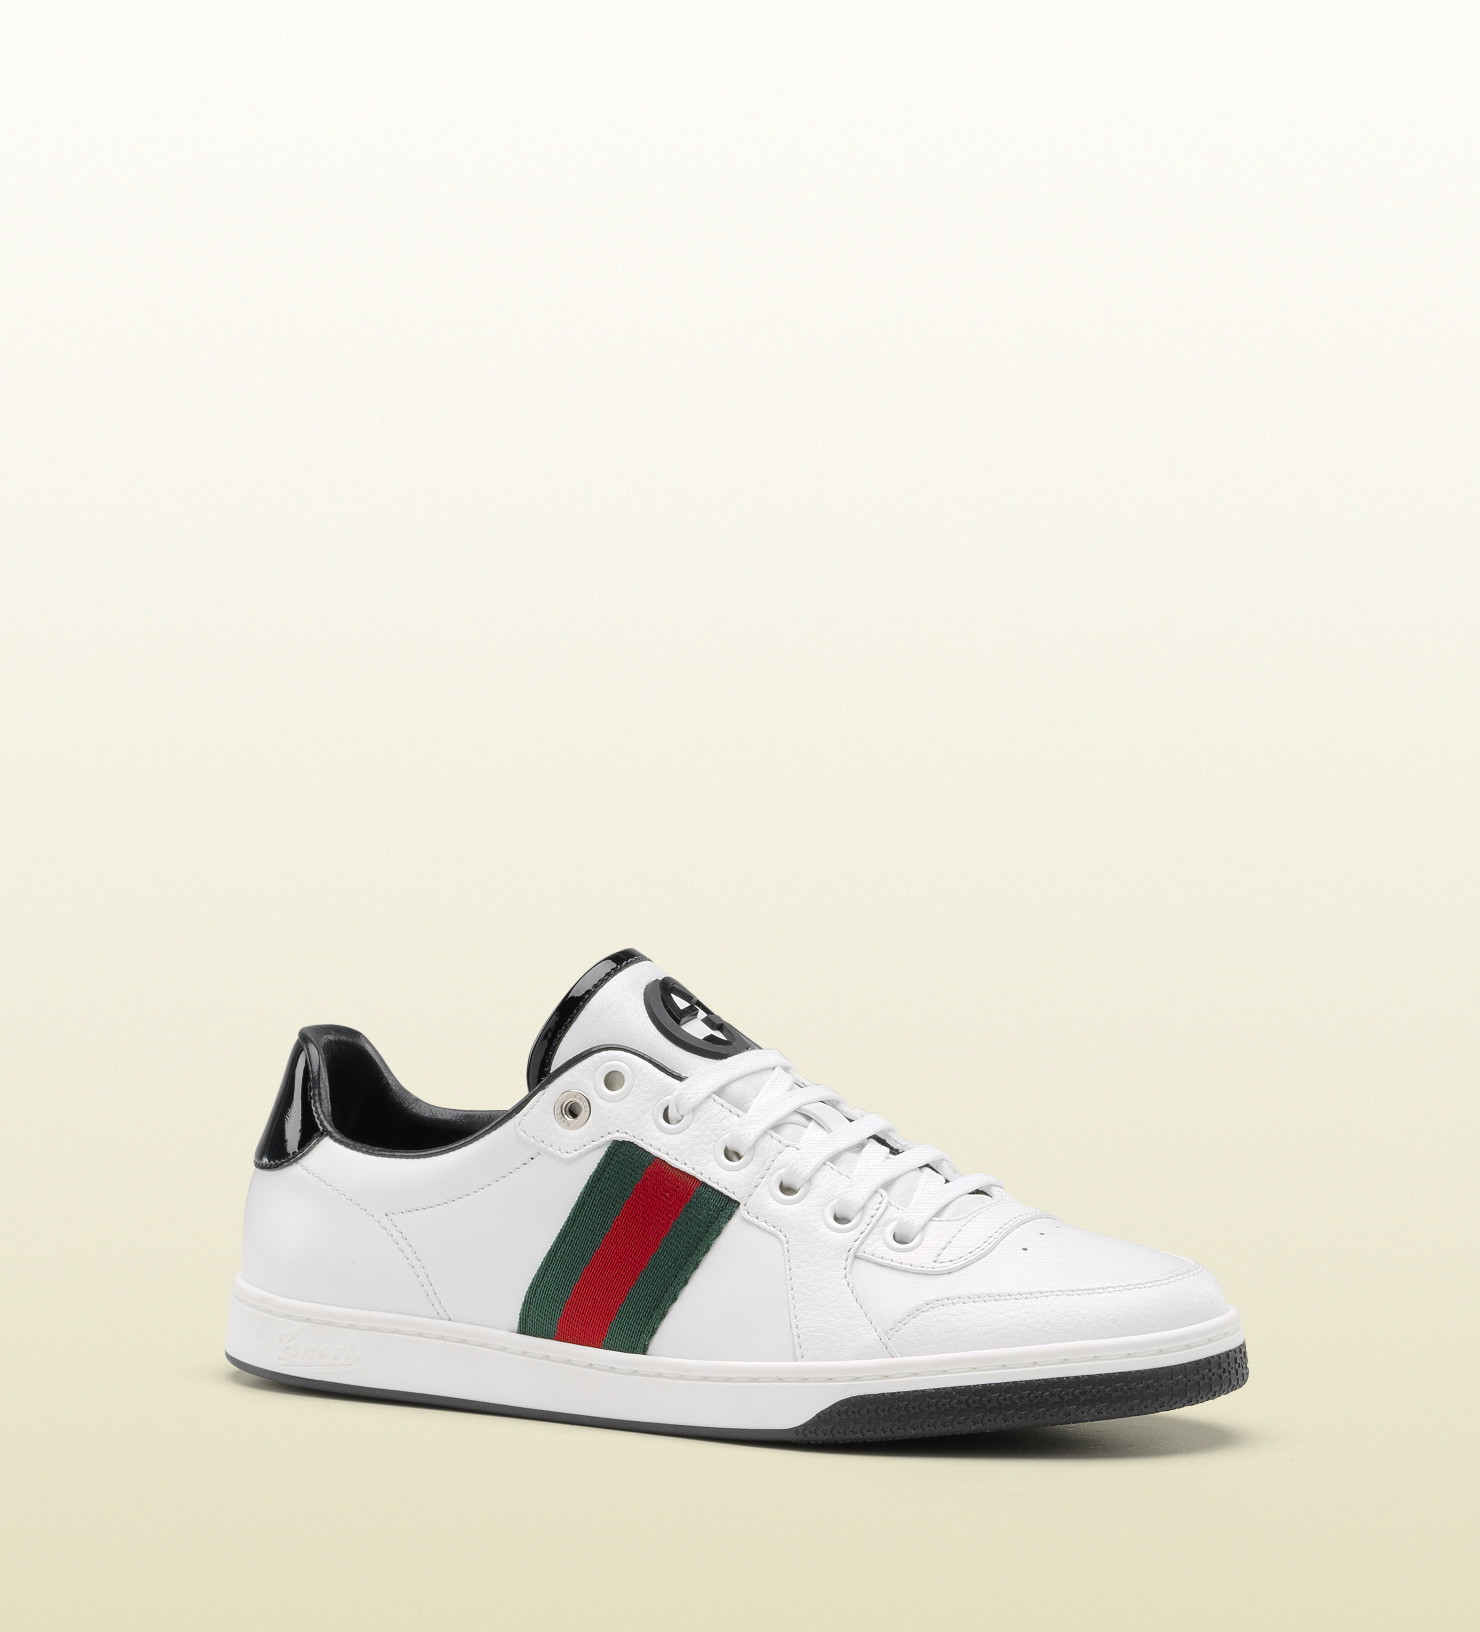 Gucci Coda Web Stripe Low Top Laceup Sneaker in White for Men - Lyst